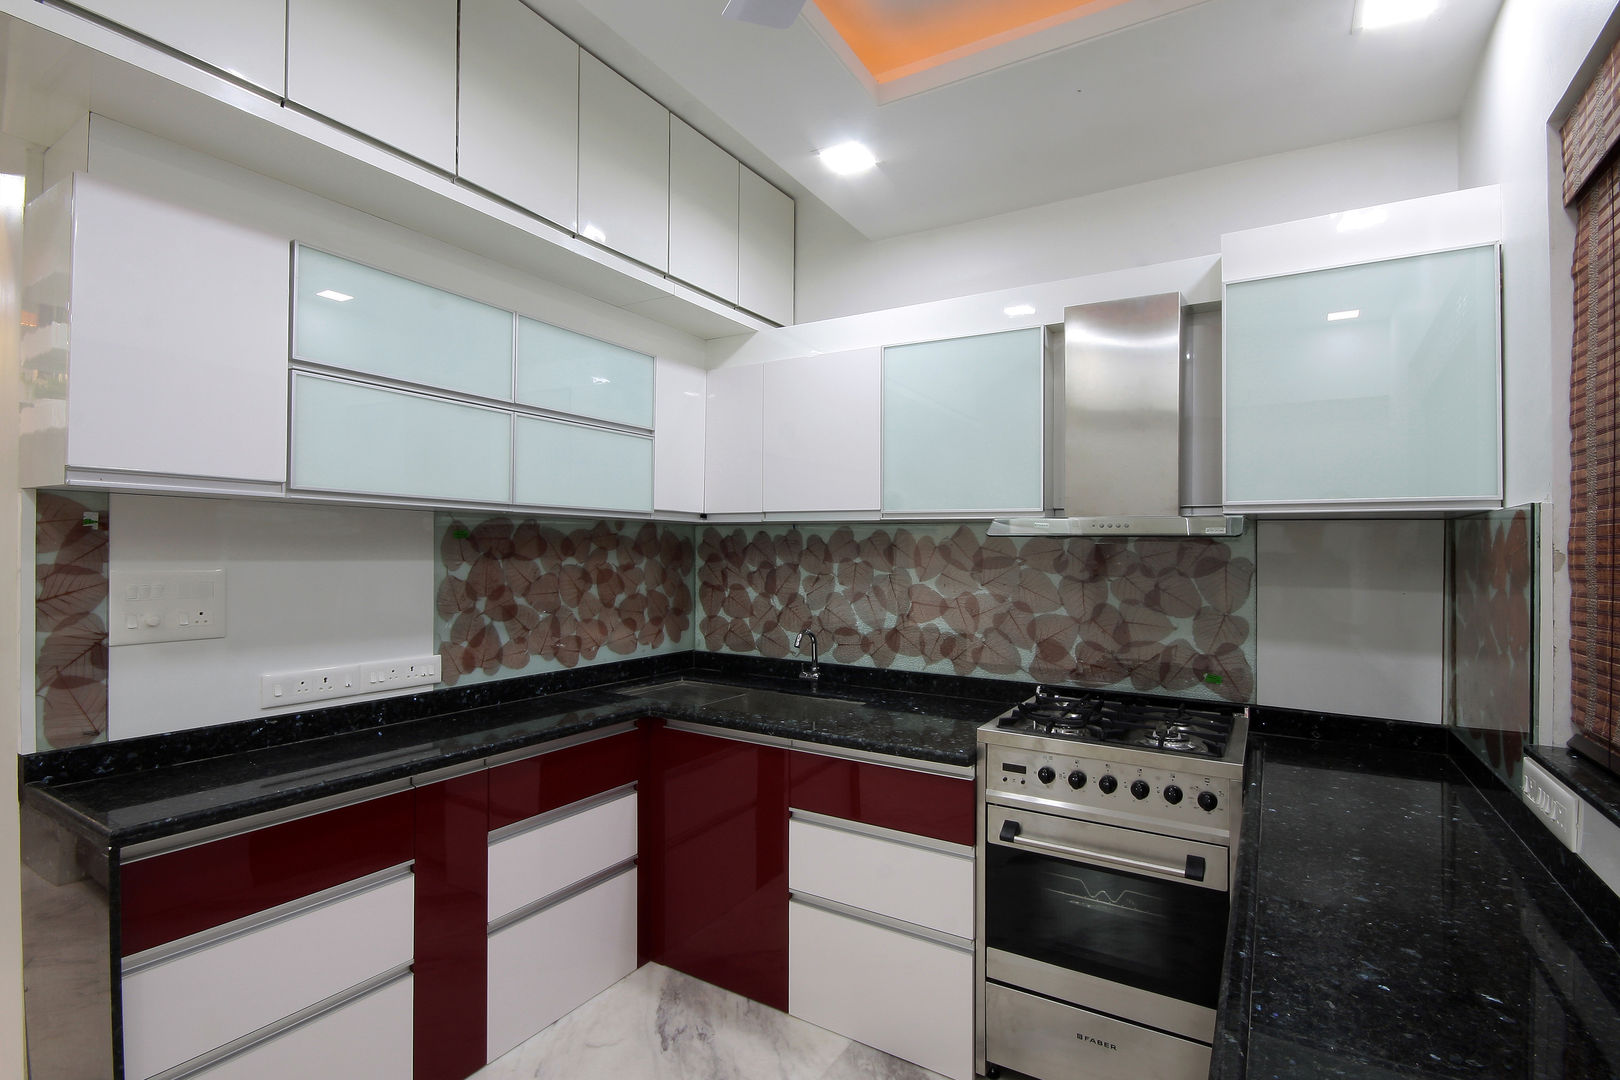 Residence - Mr. Mane, Pune. Spaceefixs Kitchen units